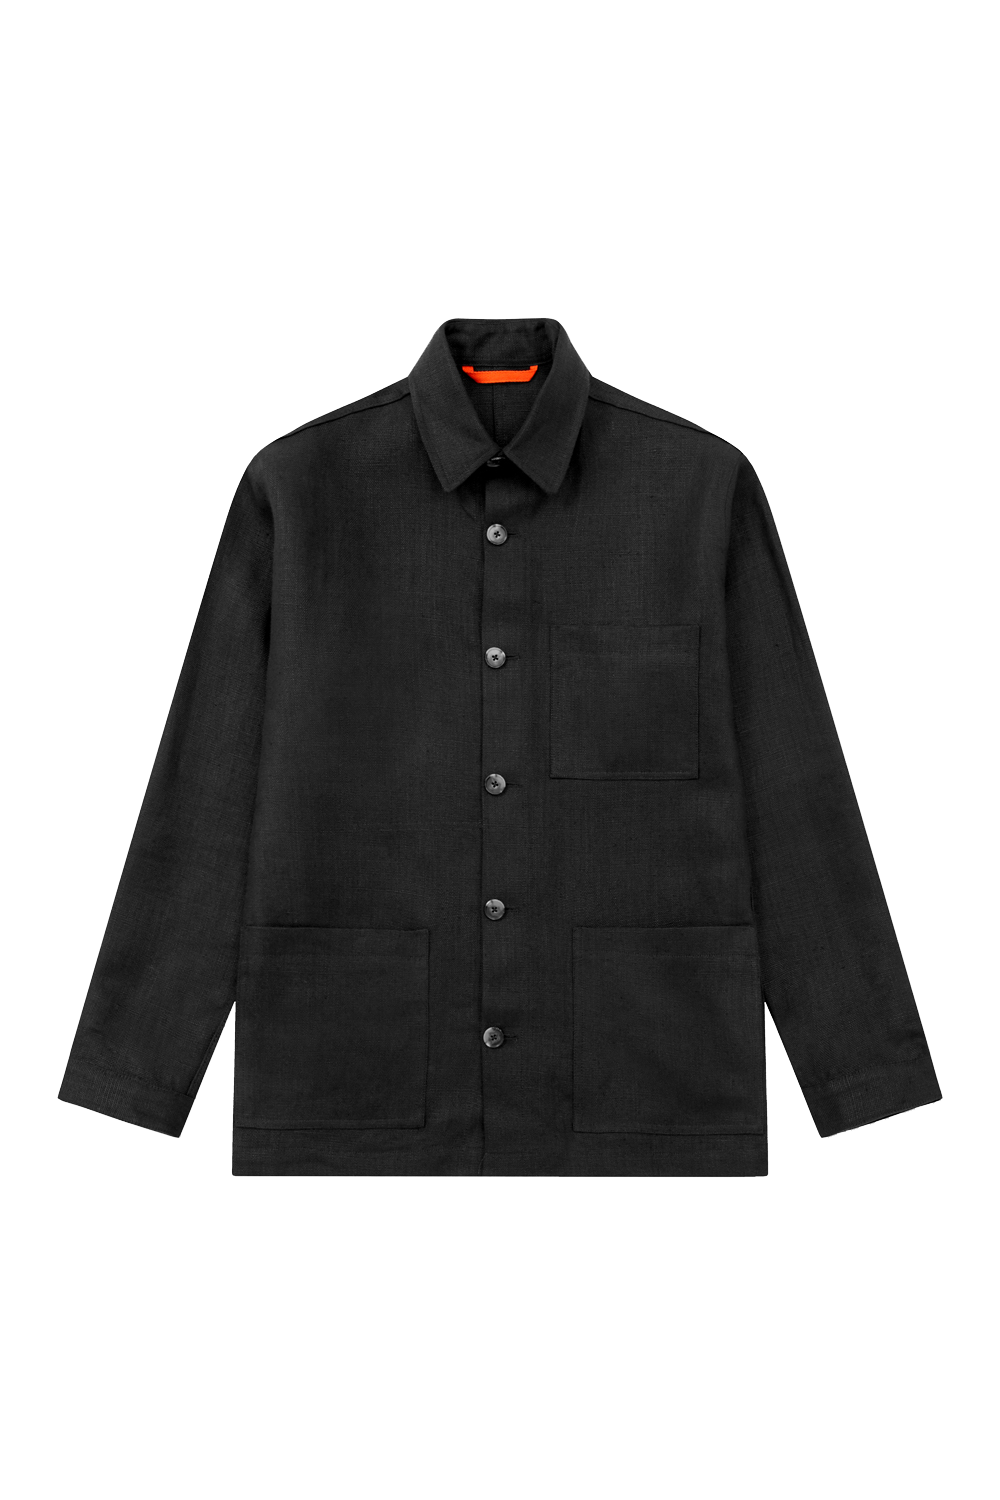 Midweight Railway Jacket Charcoal Black